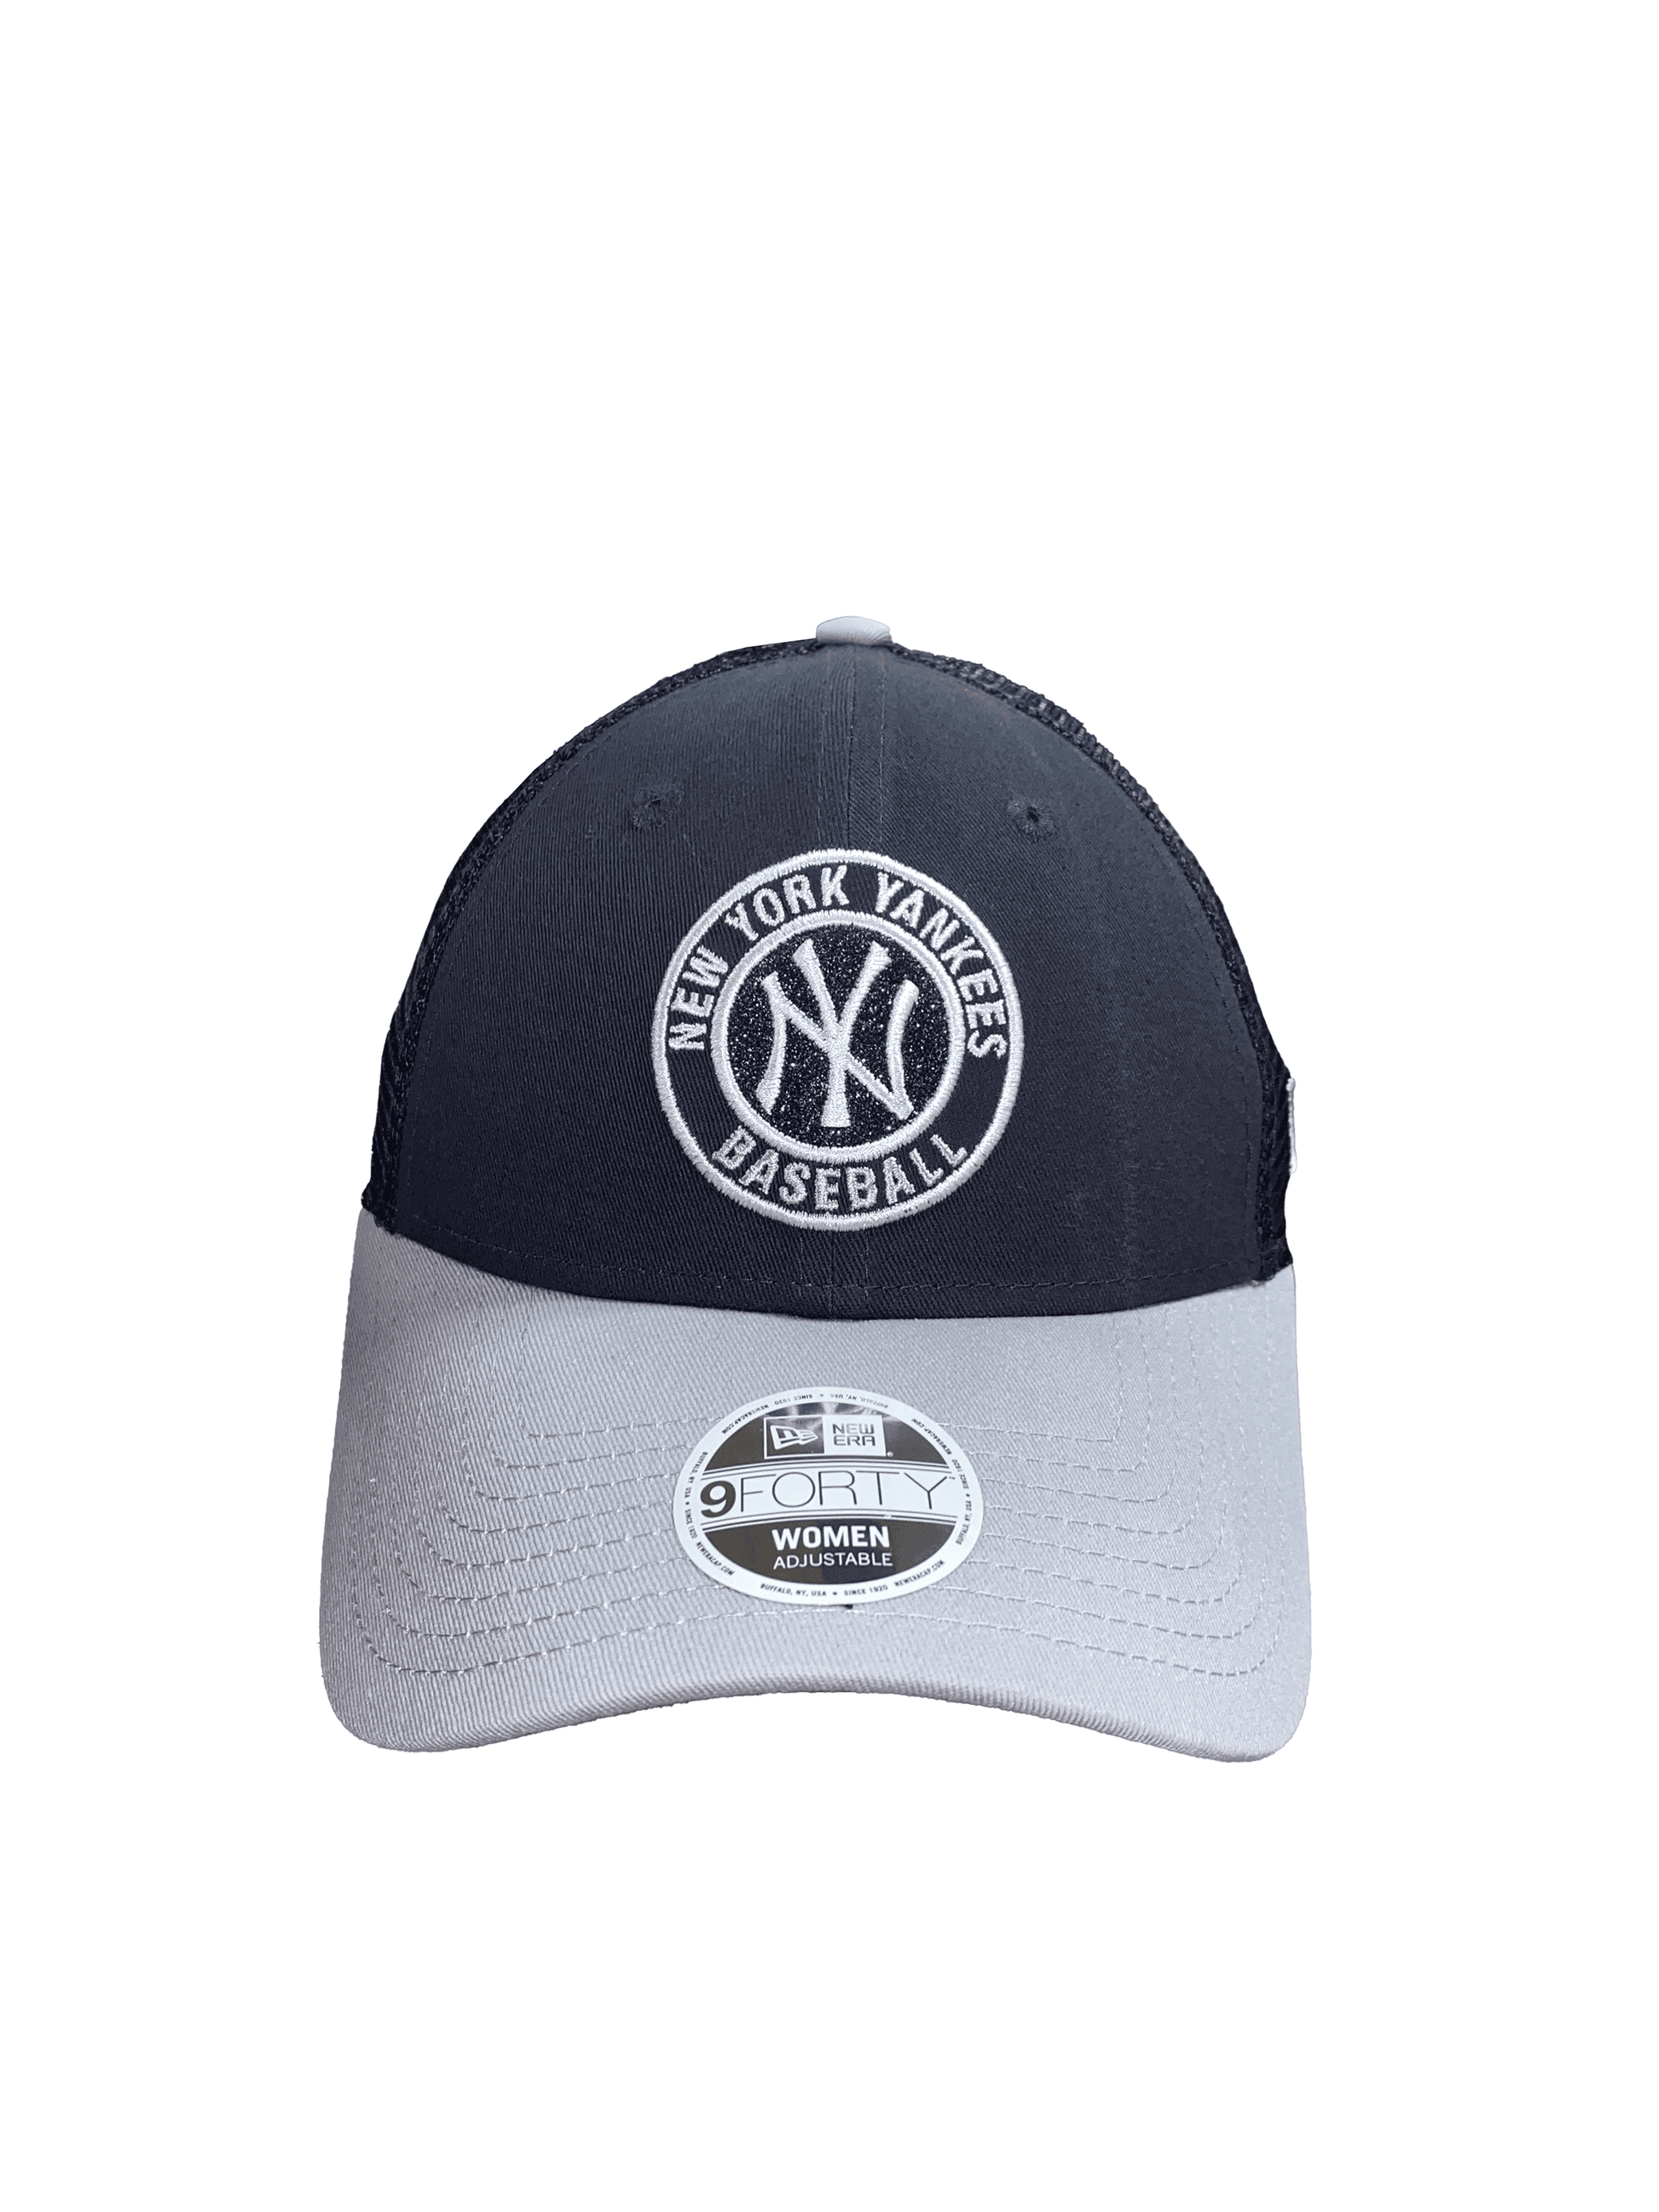 MLB Detroit Tigers Sparkle Women's Adjustable Cap/Hat by Fan Favorite 